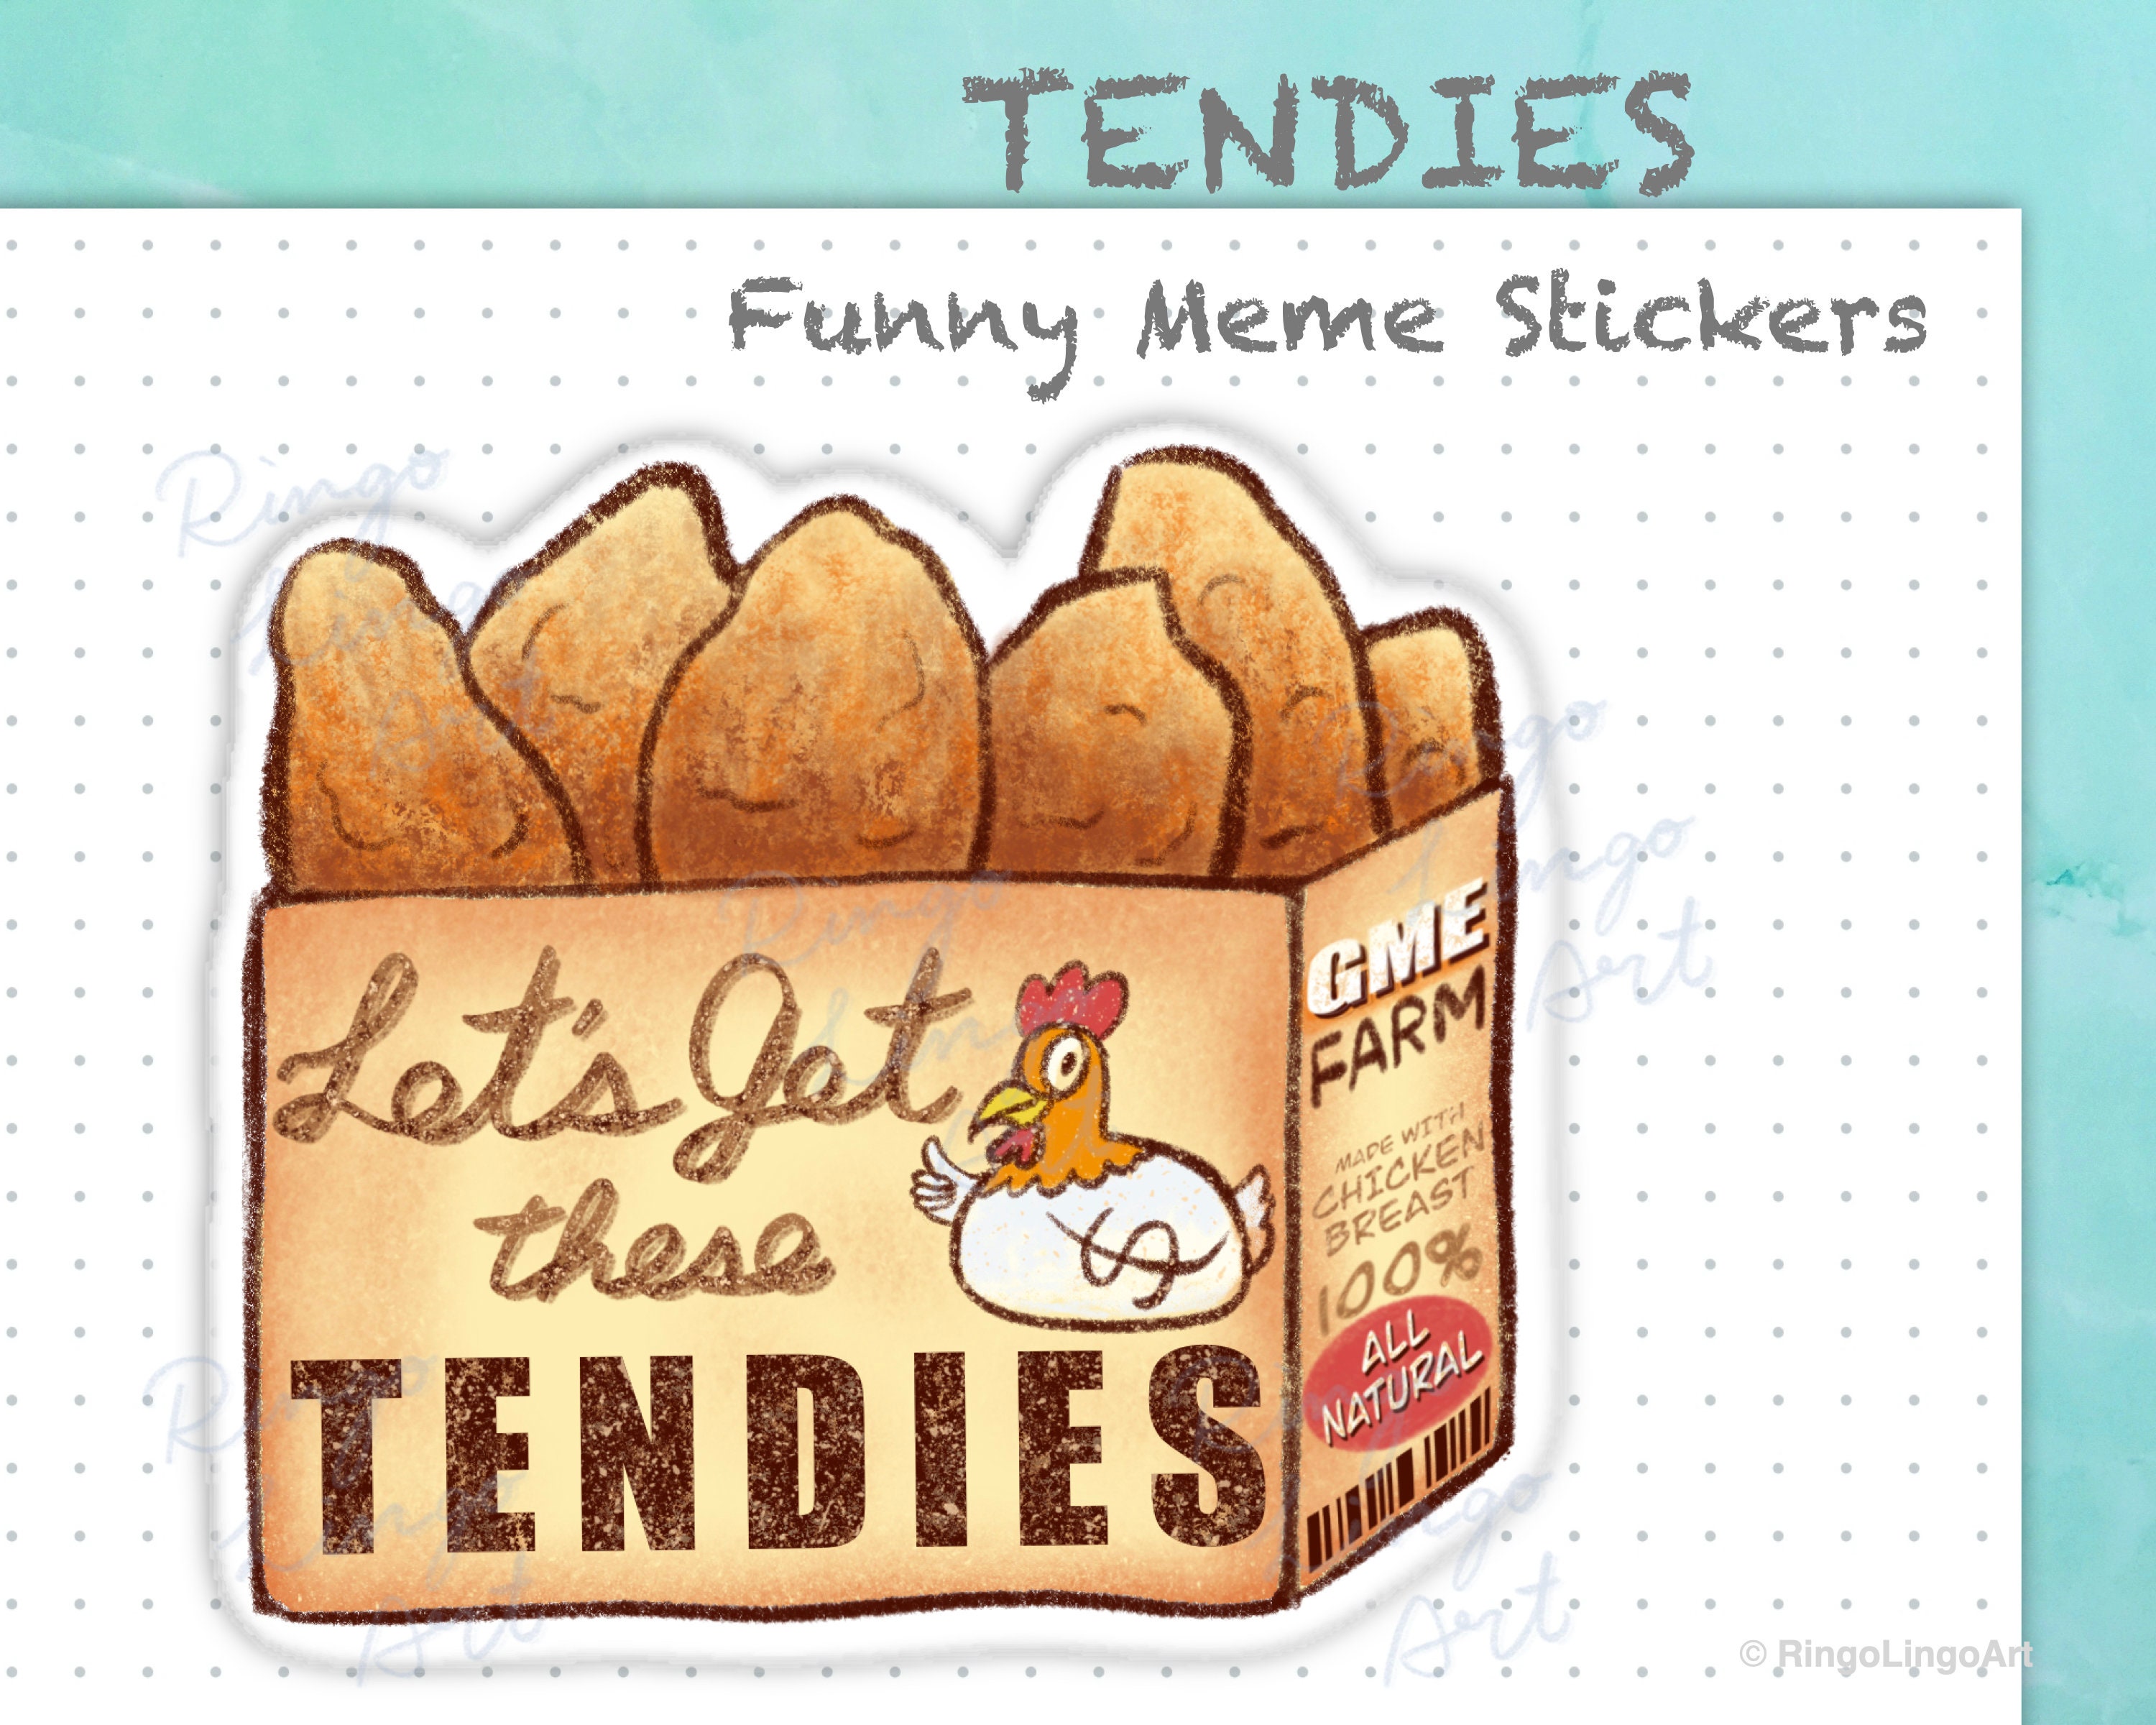 20pcs Vine Meme Stickers Popular Funny Food Sticker Buy 2 Get 1 Free 